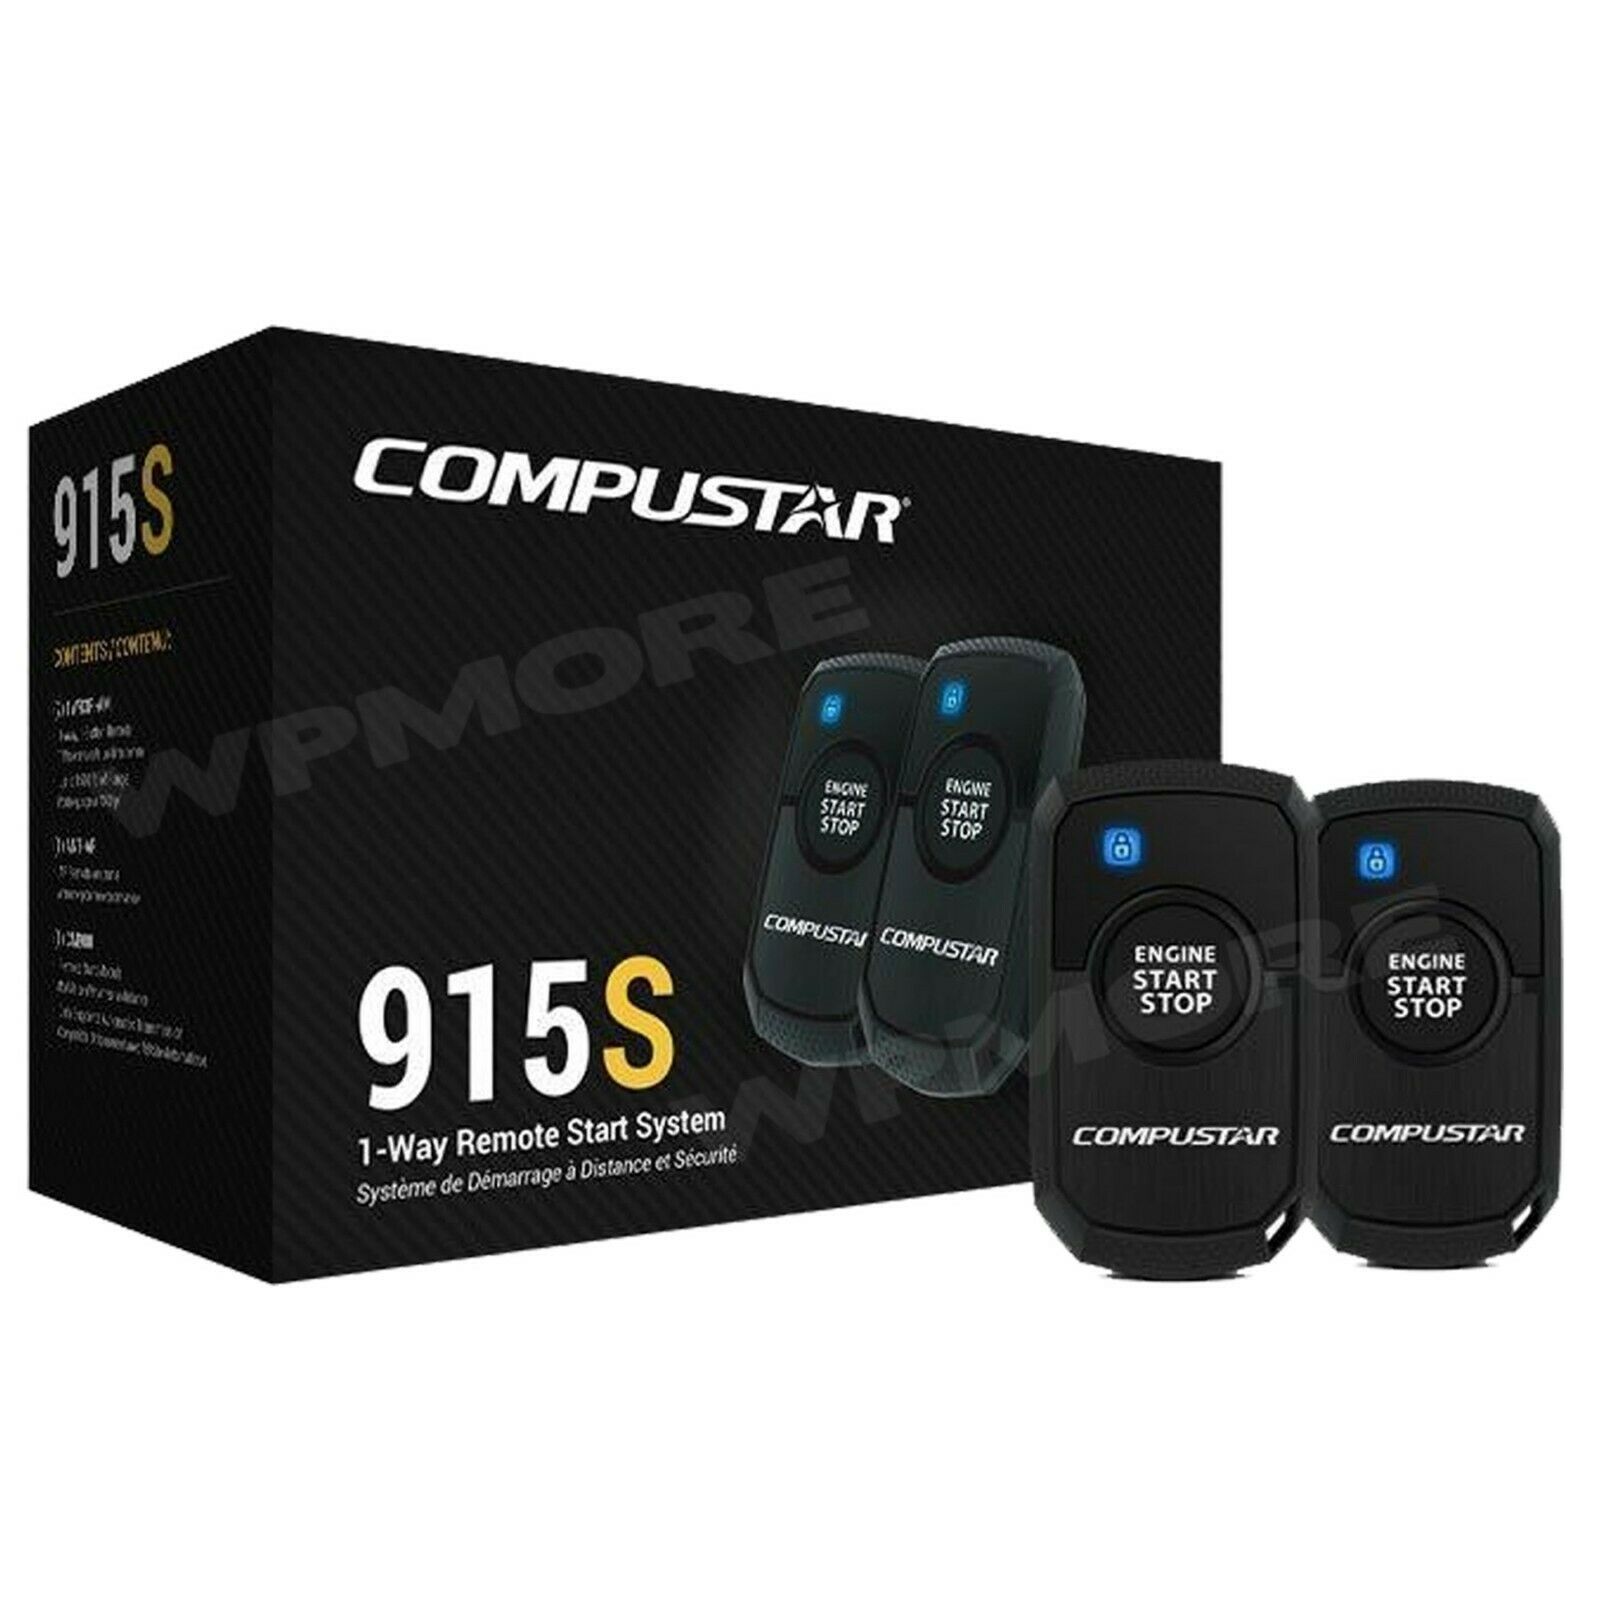 Compustar Cs915 S 1-way 1500-ft Range 1-button Remote Start Keyless Entry System